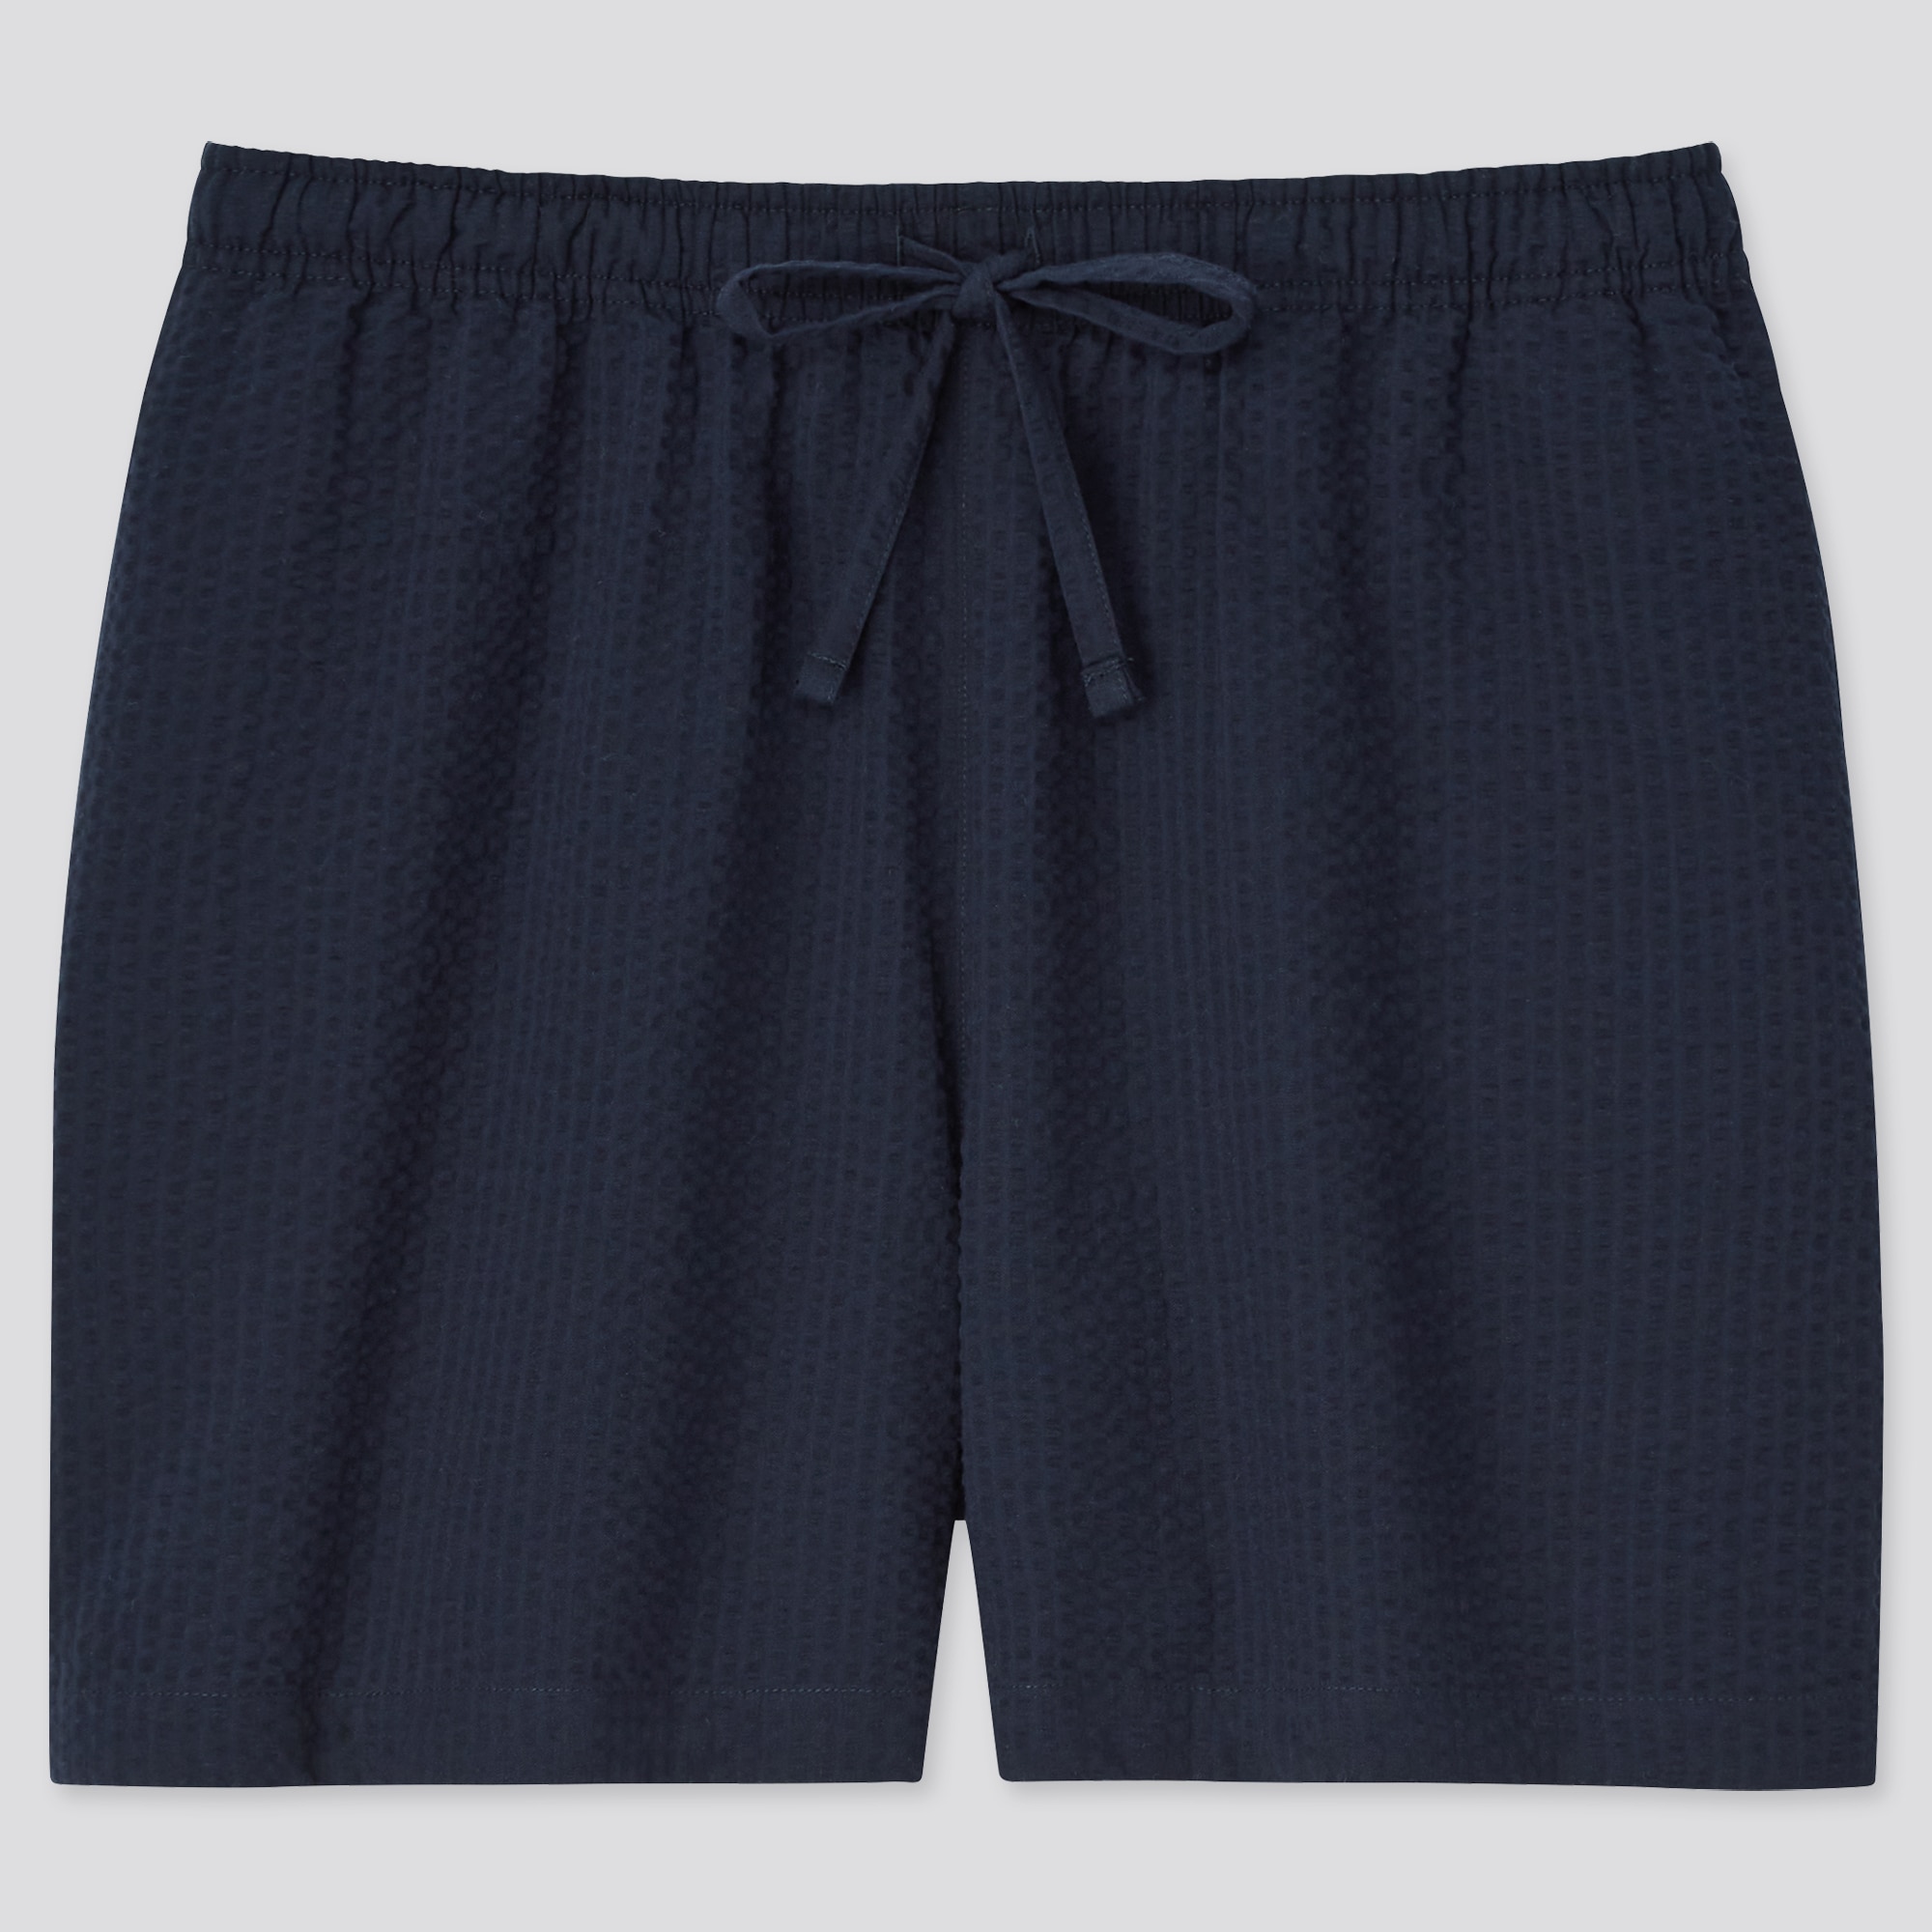 Uniqlo navy paper bag shorts  Blue shorts outfit, Uniqlo shorts, Belted  shorts outfits